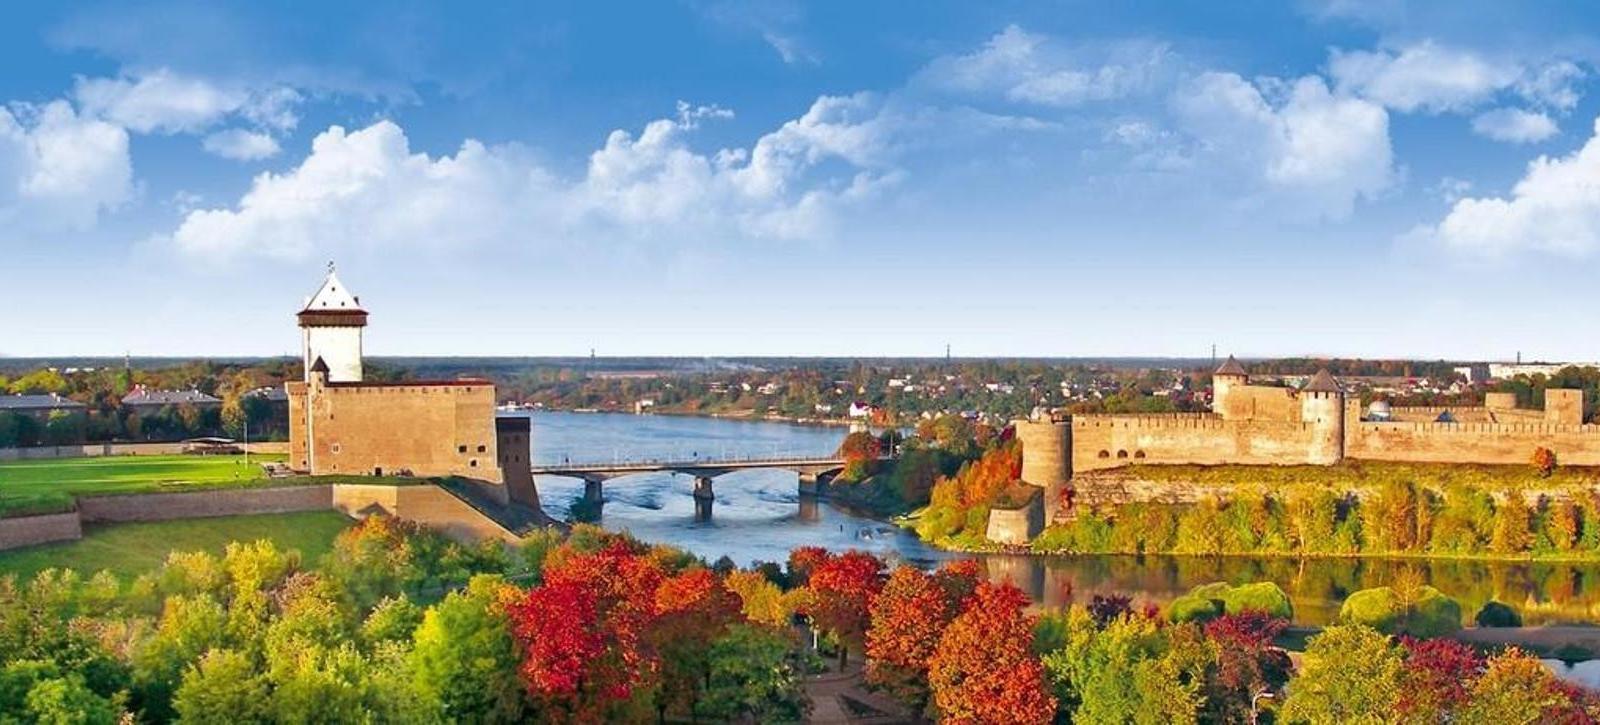 Narva - Estonia's Autumn Capital